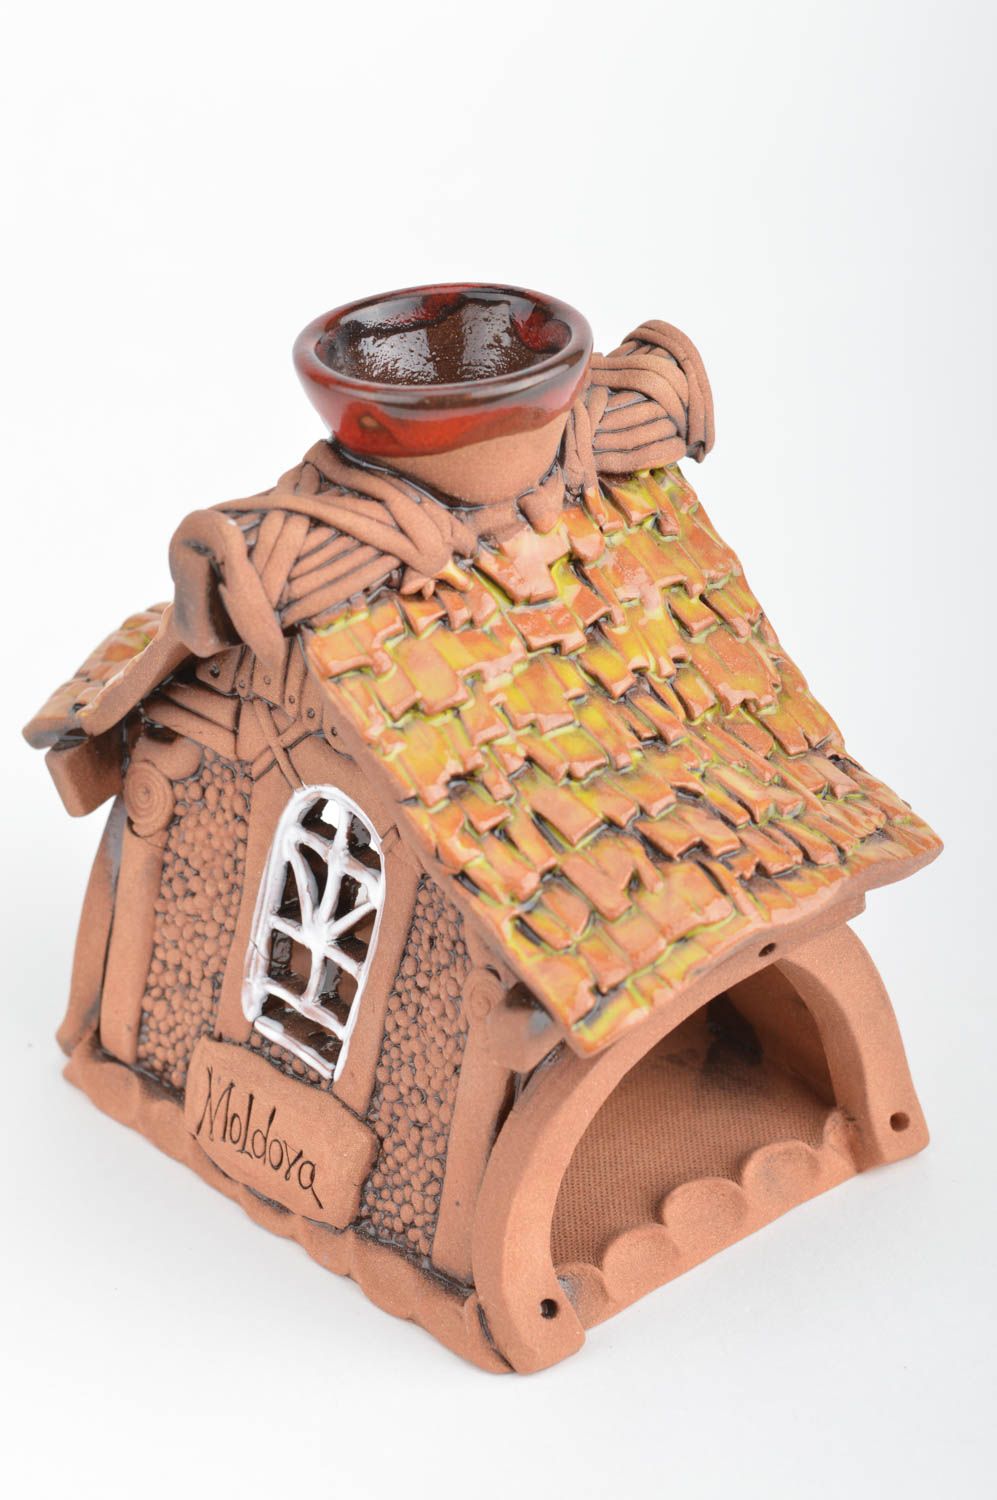 Clay aroma lamp handmade small house with glazed ceramic interior candlestick photo 5